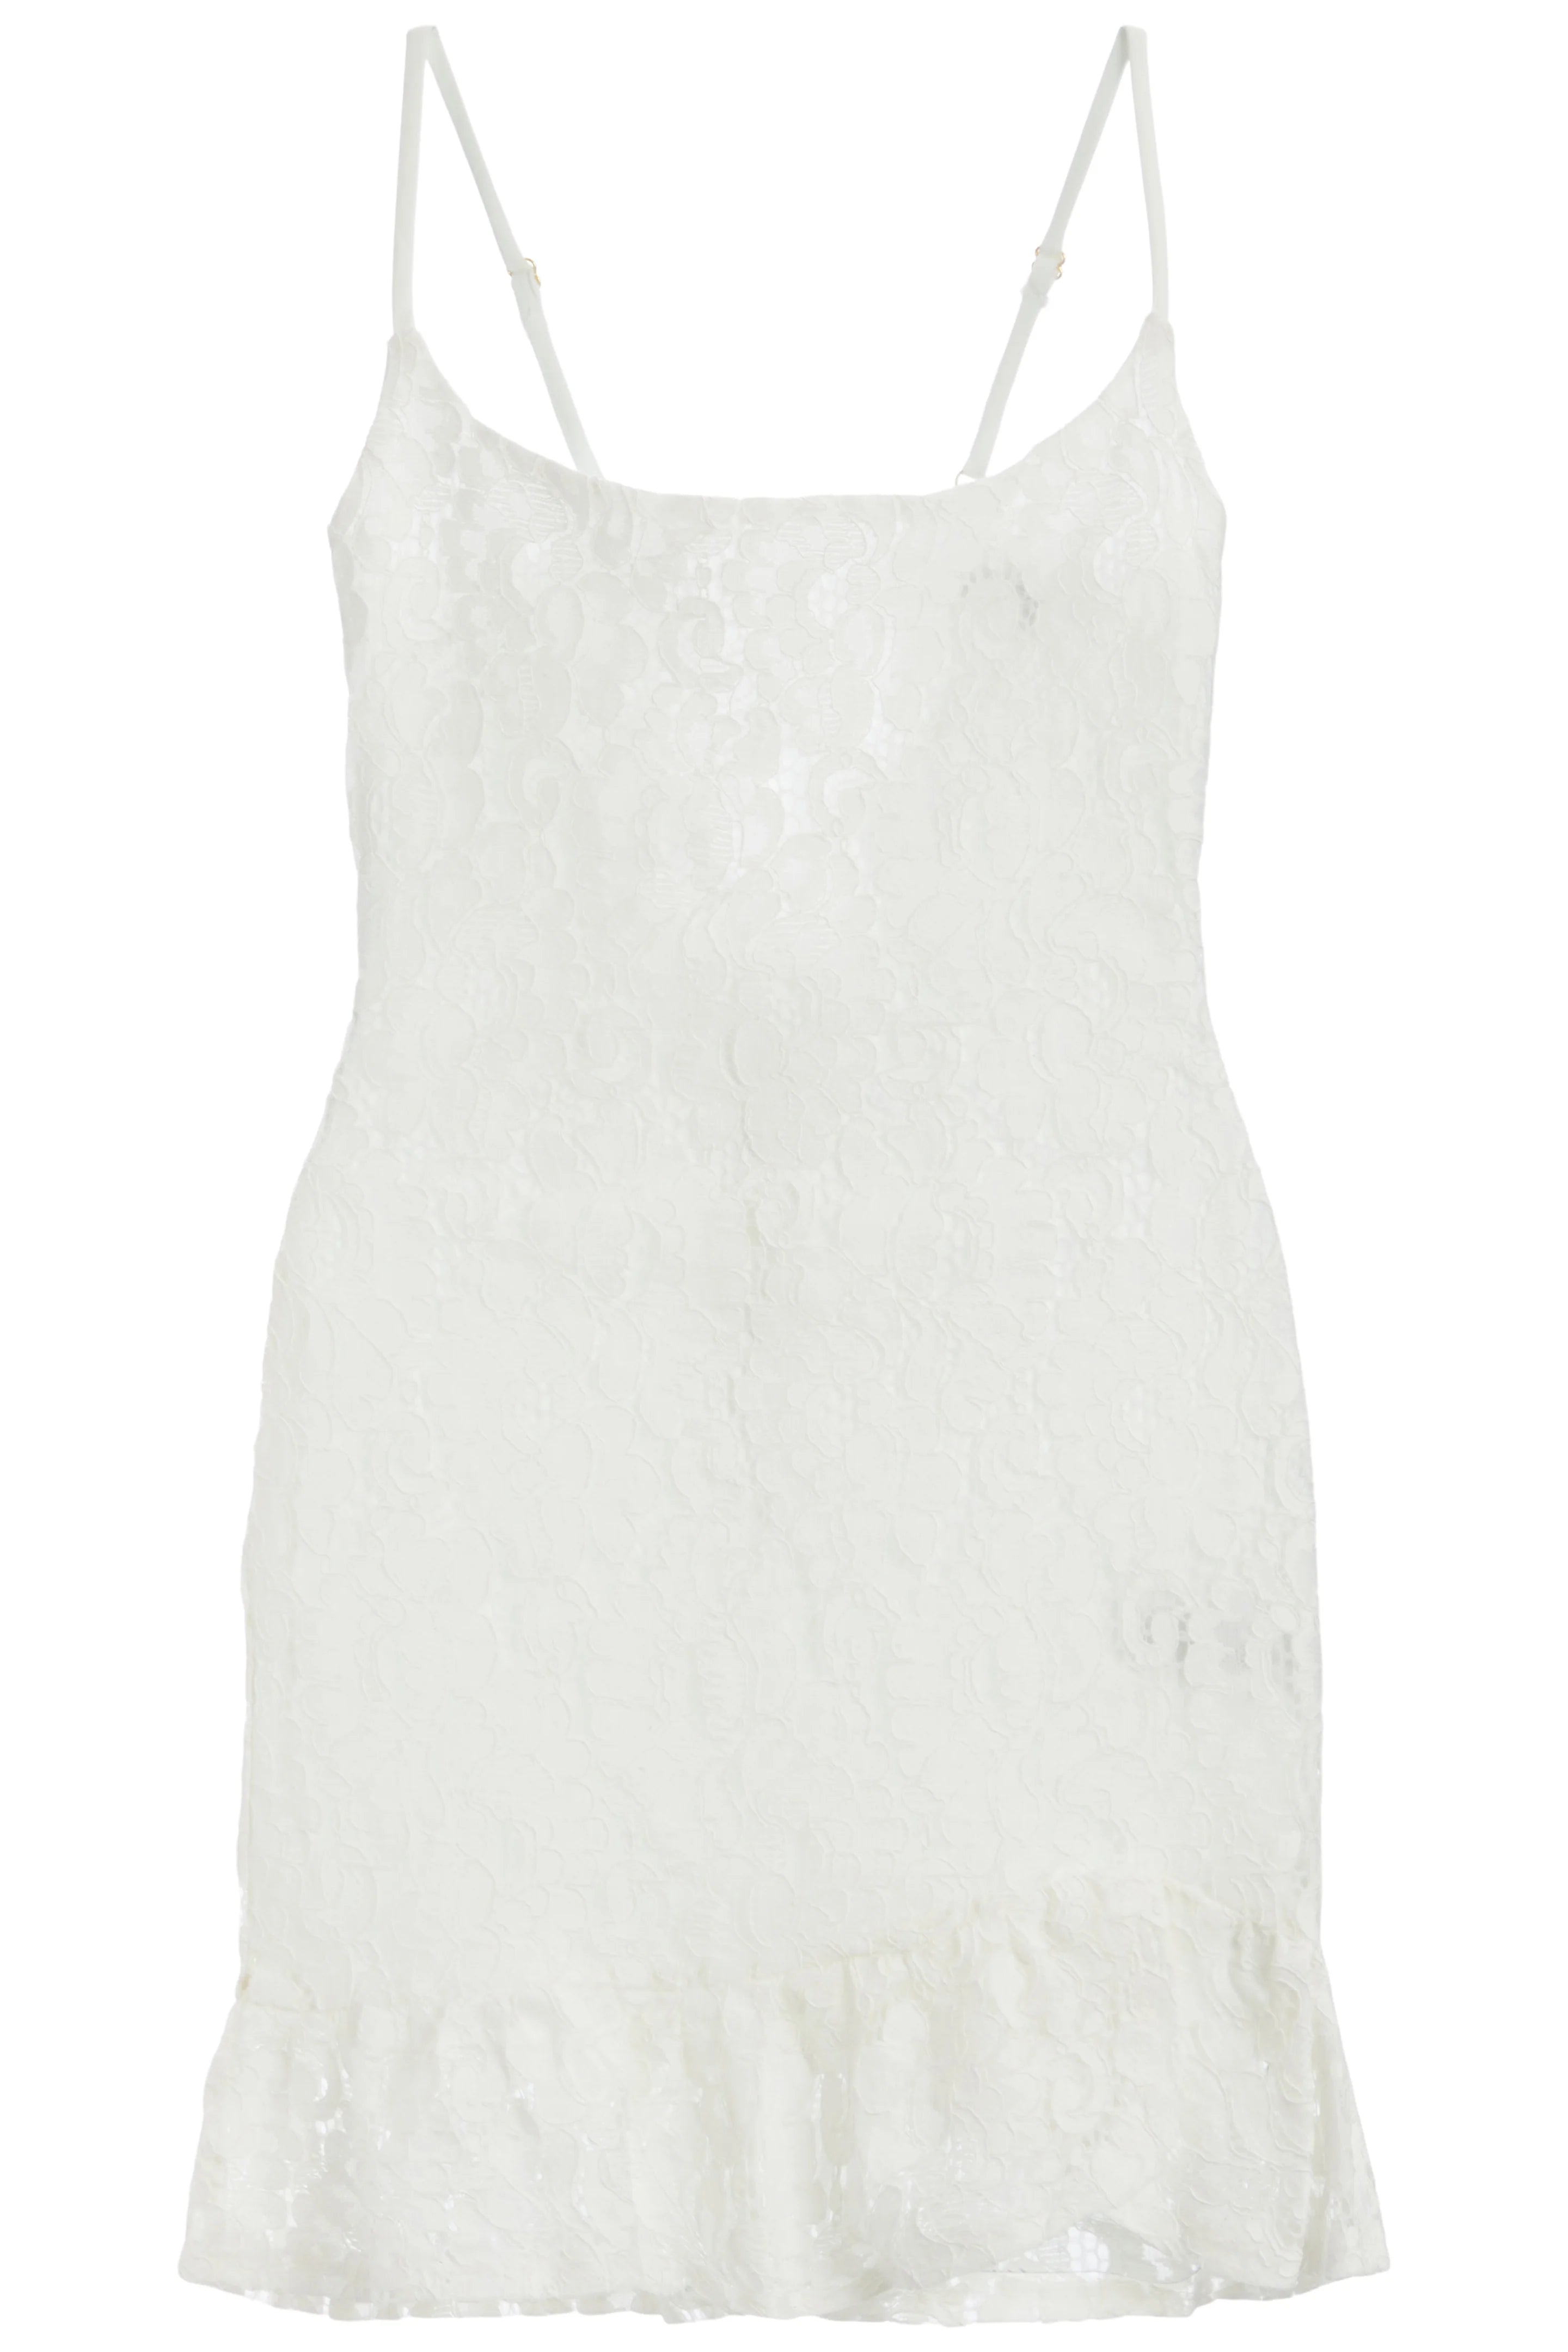 MISS BEHAVE PEYTON DRESS - WHITE